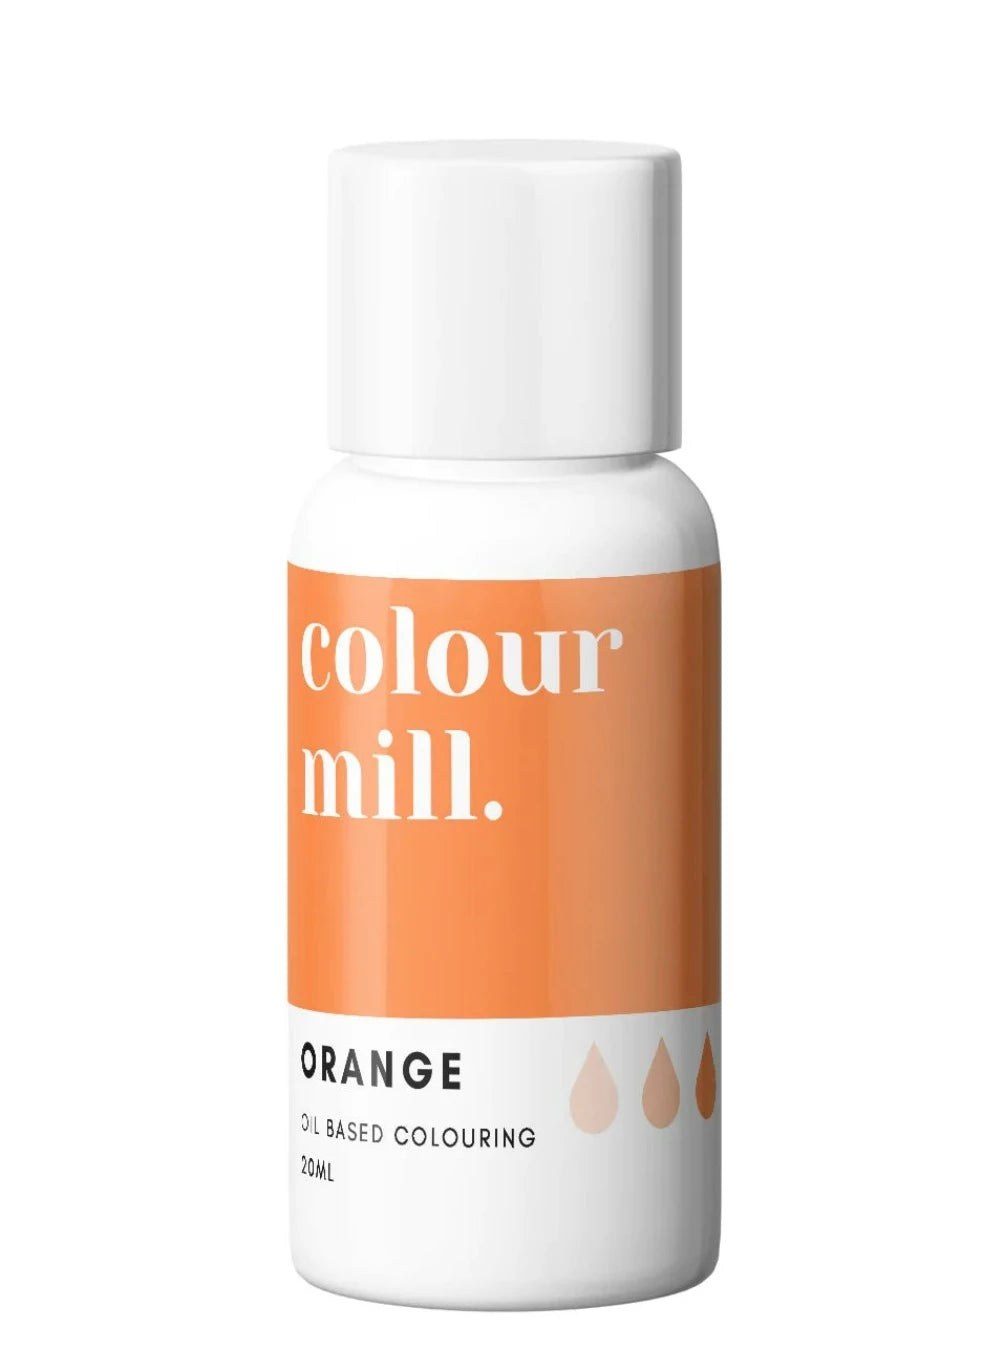 orange colour mill, colour mill oil based, orange oil based colouring, colour mill orange, color para chocolate, 